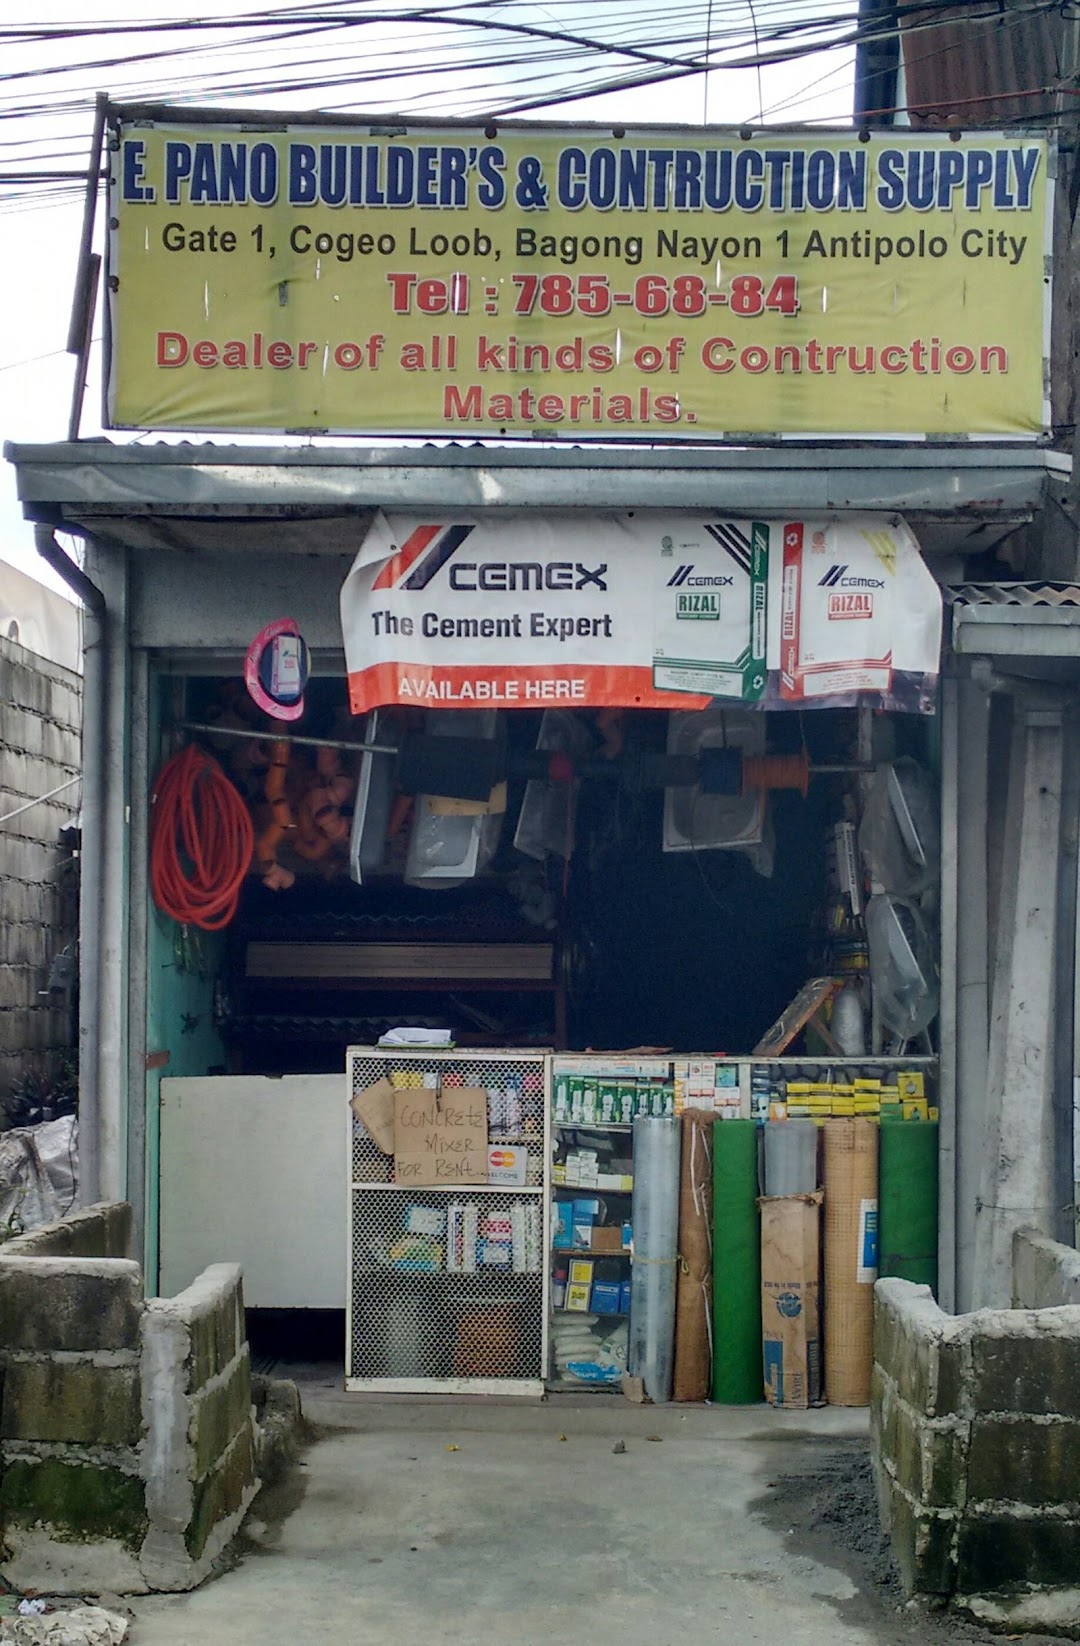 E. Pano Builders & Construction Supply